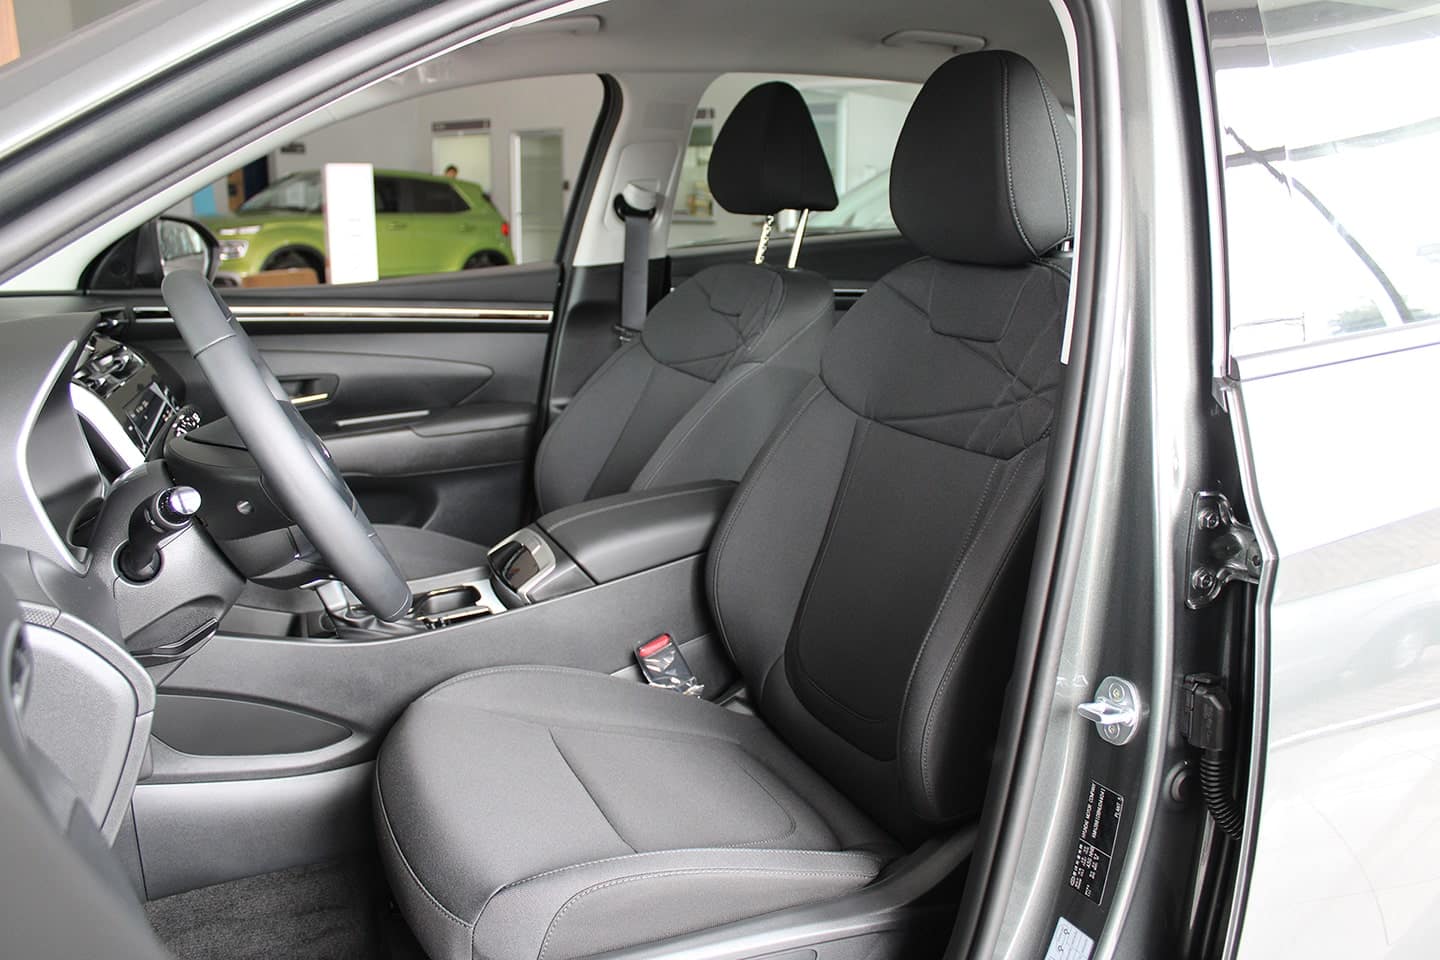 interior asientos frente Tucson Hyundai SUV Honduras models dealer buy cars